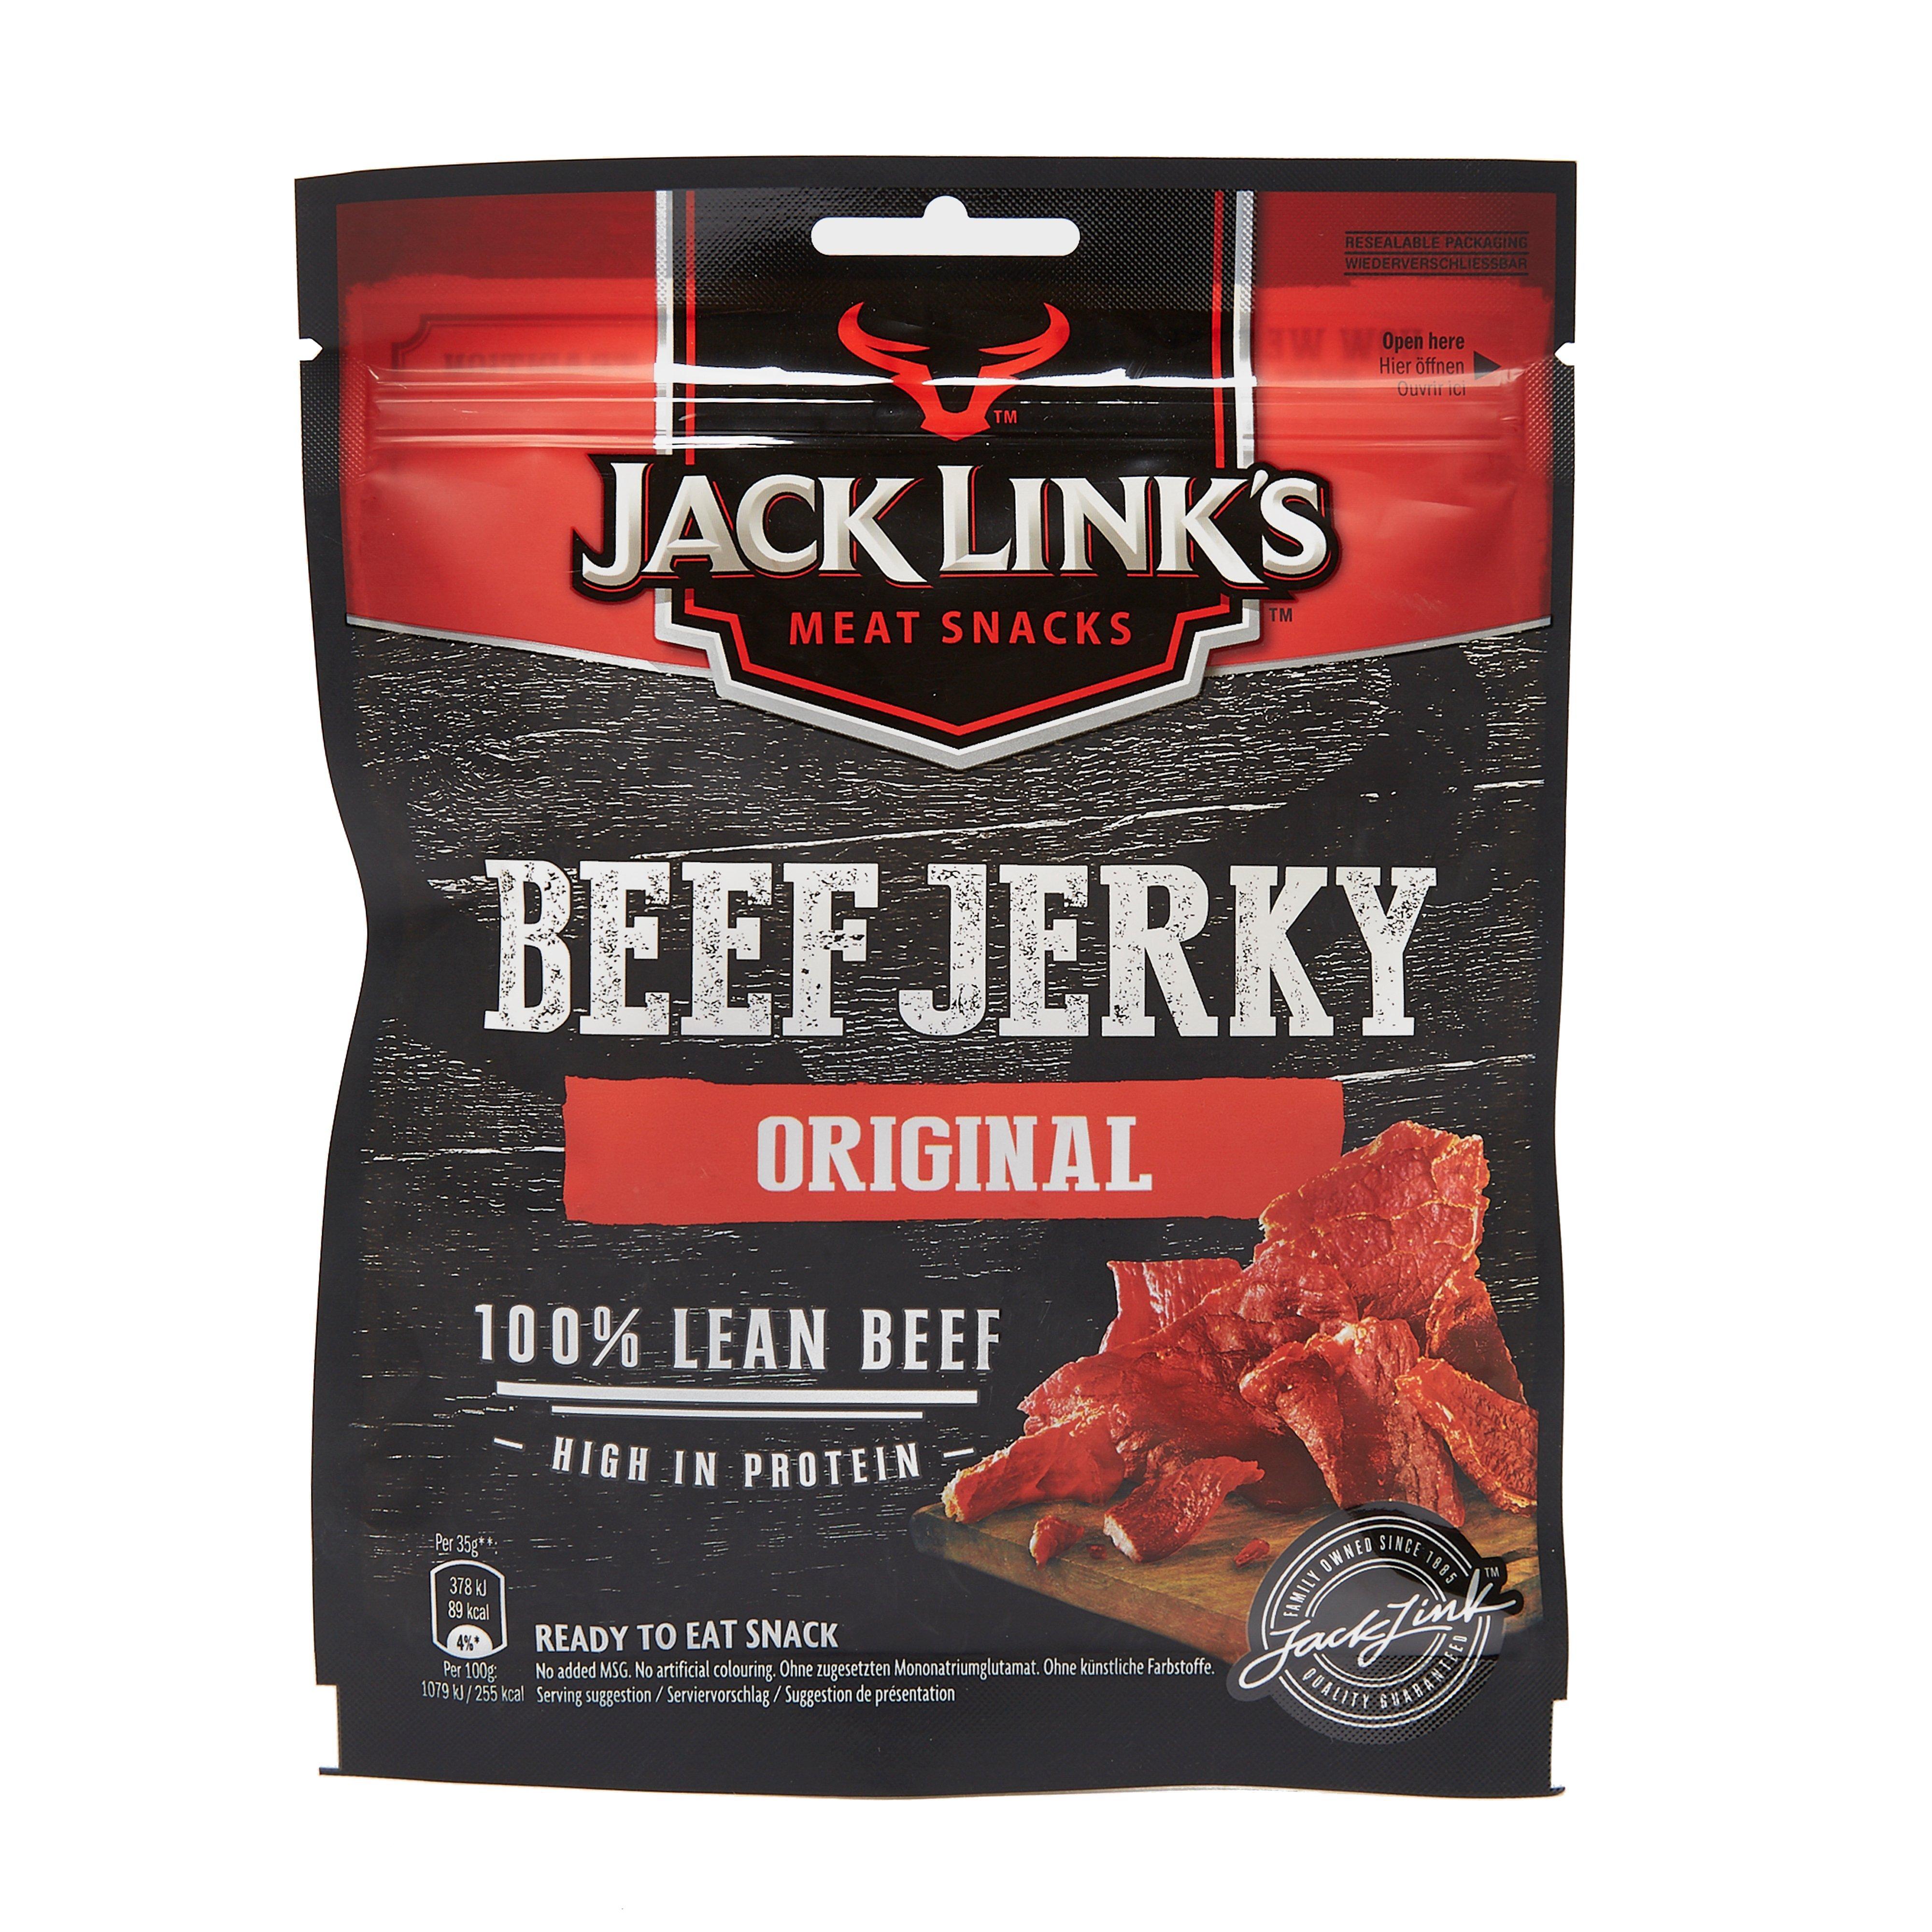 JACK LINKS Beef Jerky Sweet & Hot Review